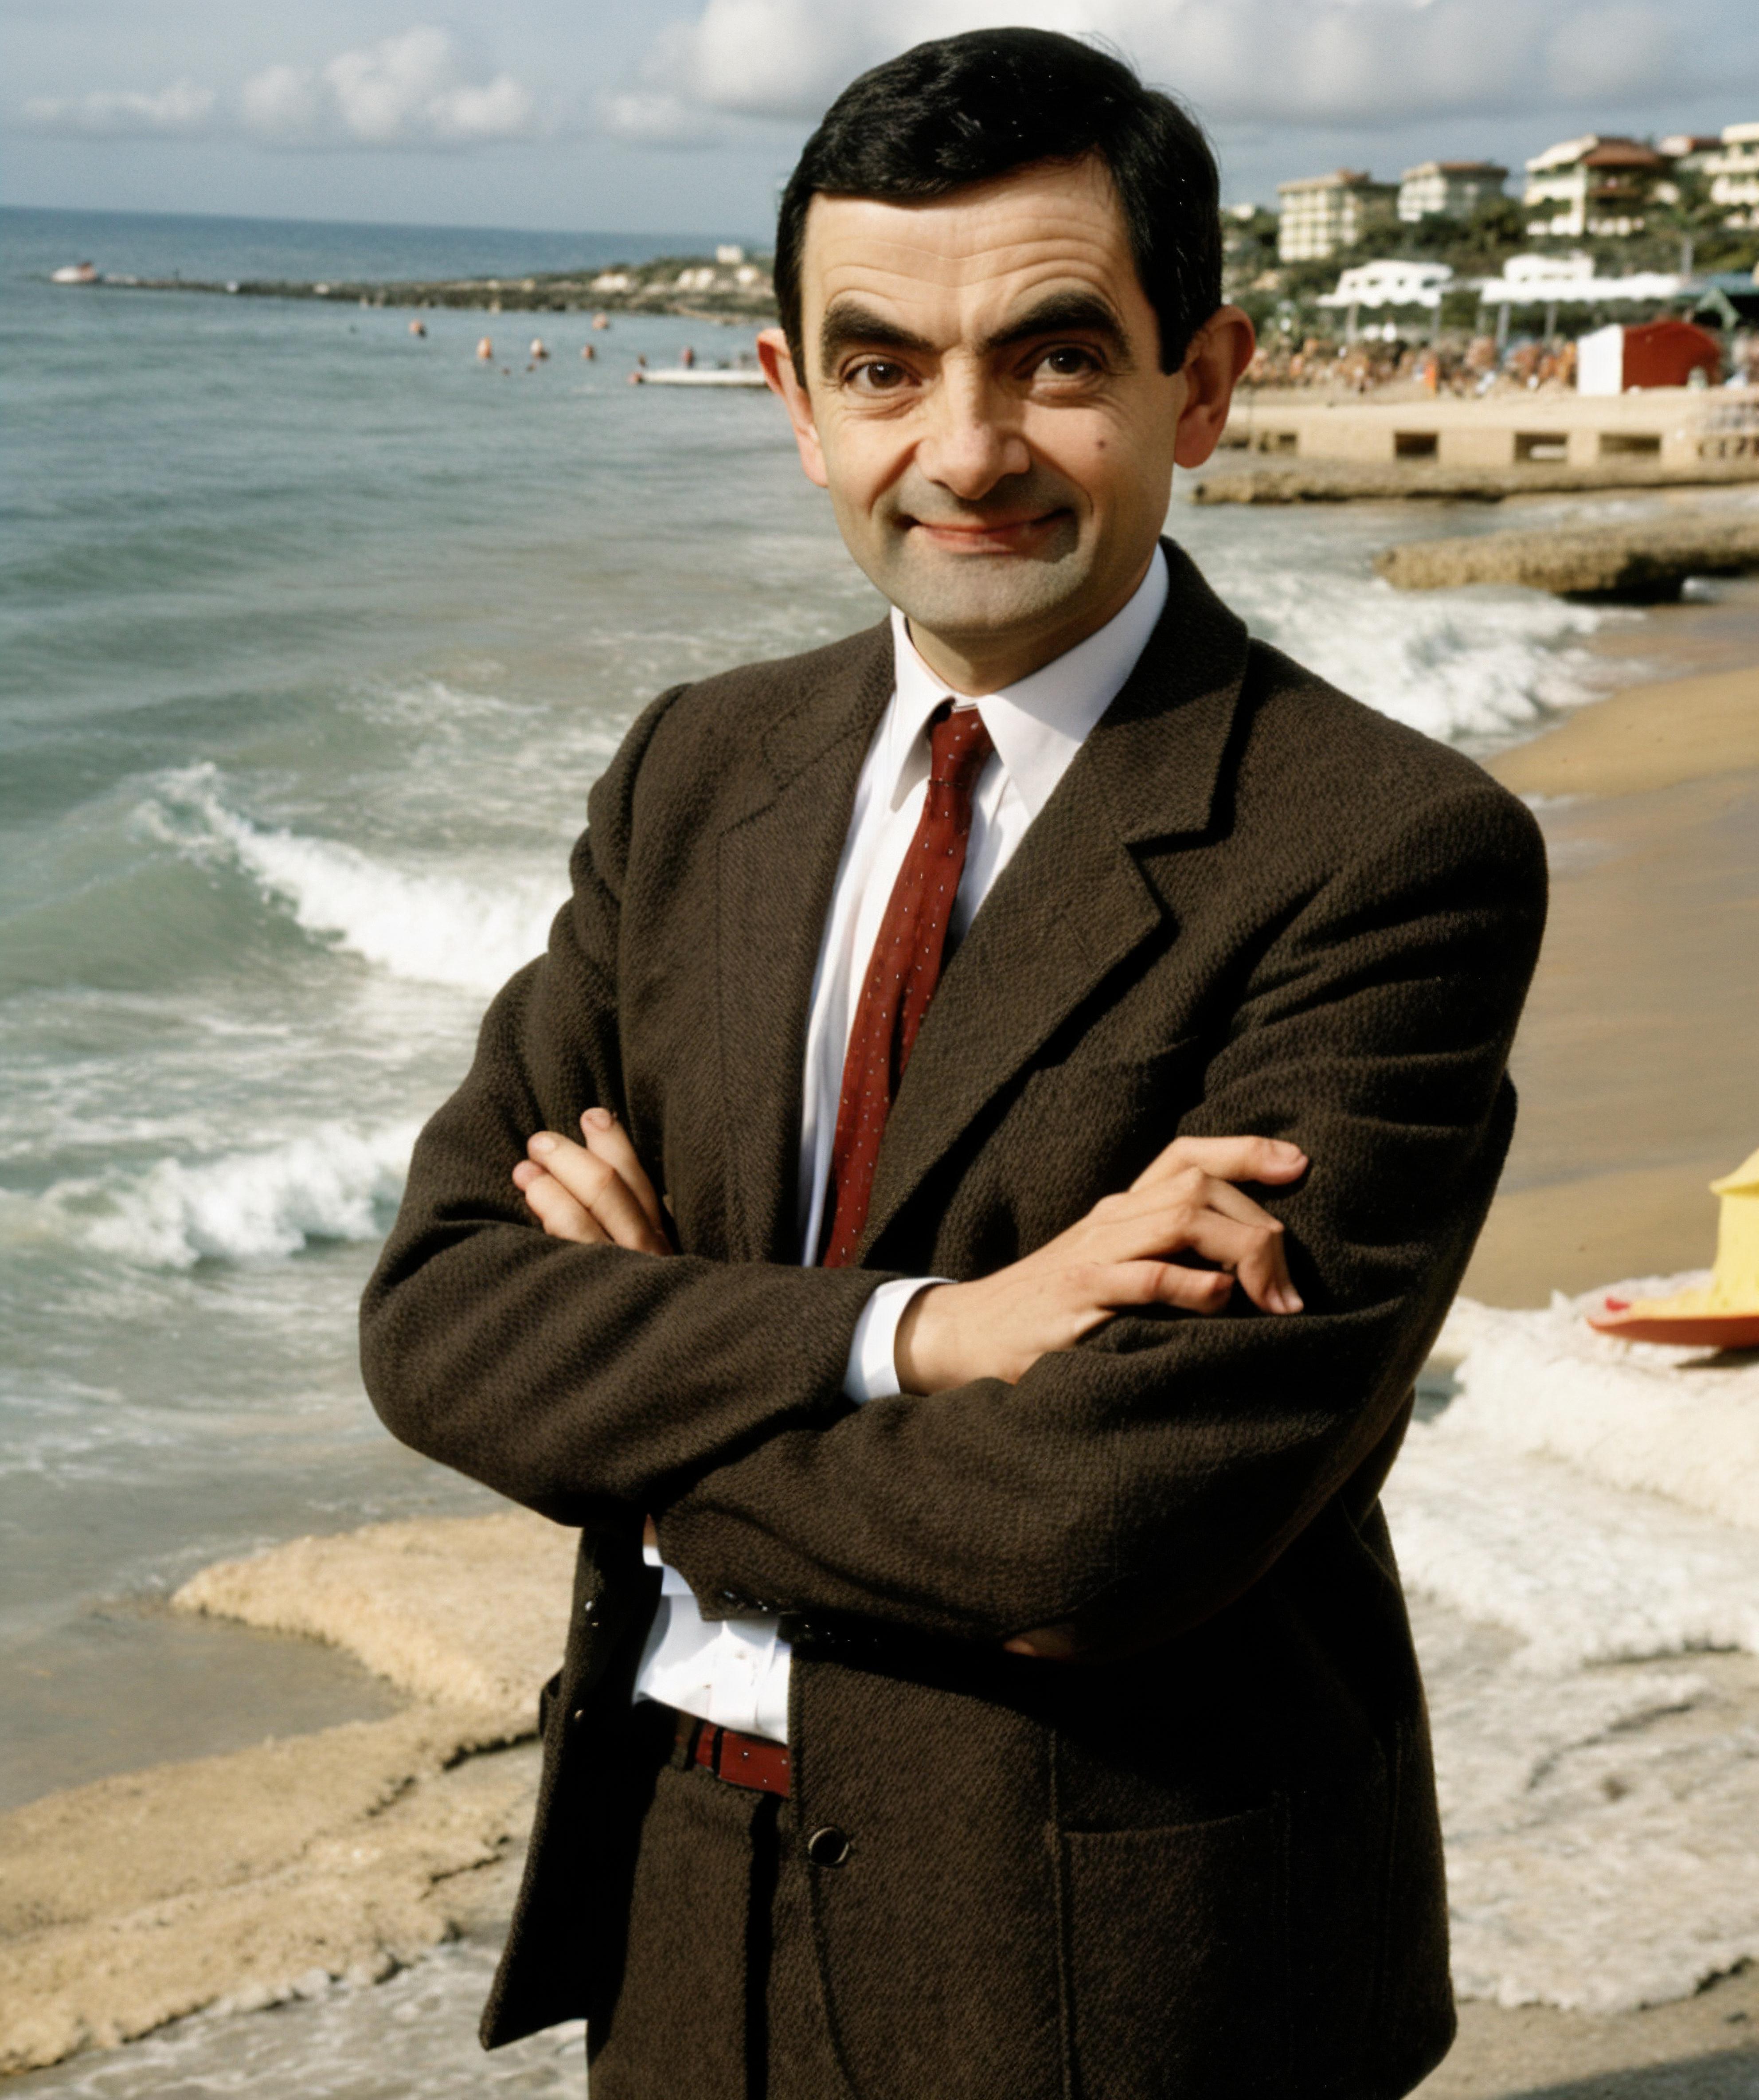 Mr Bean image by doomguy11111